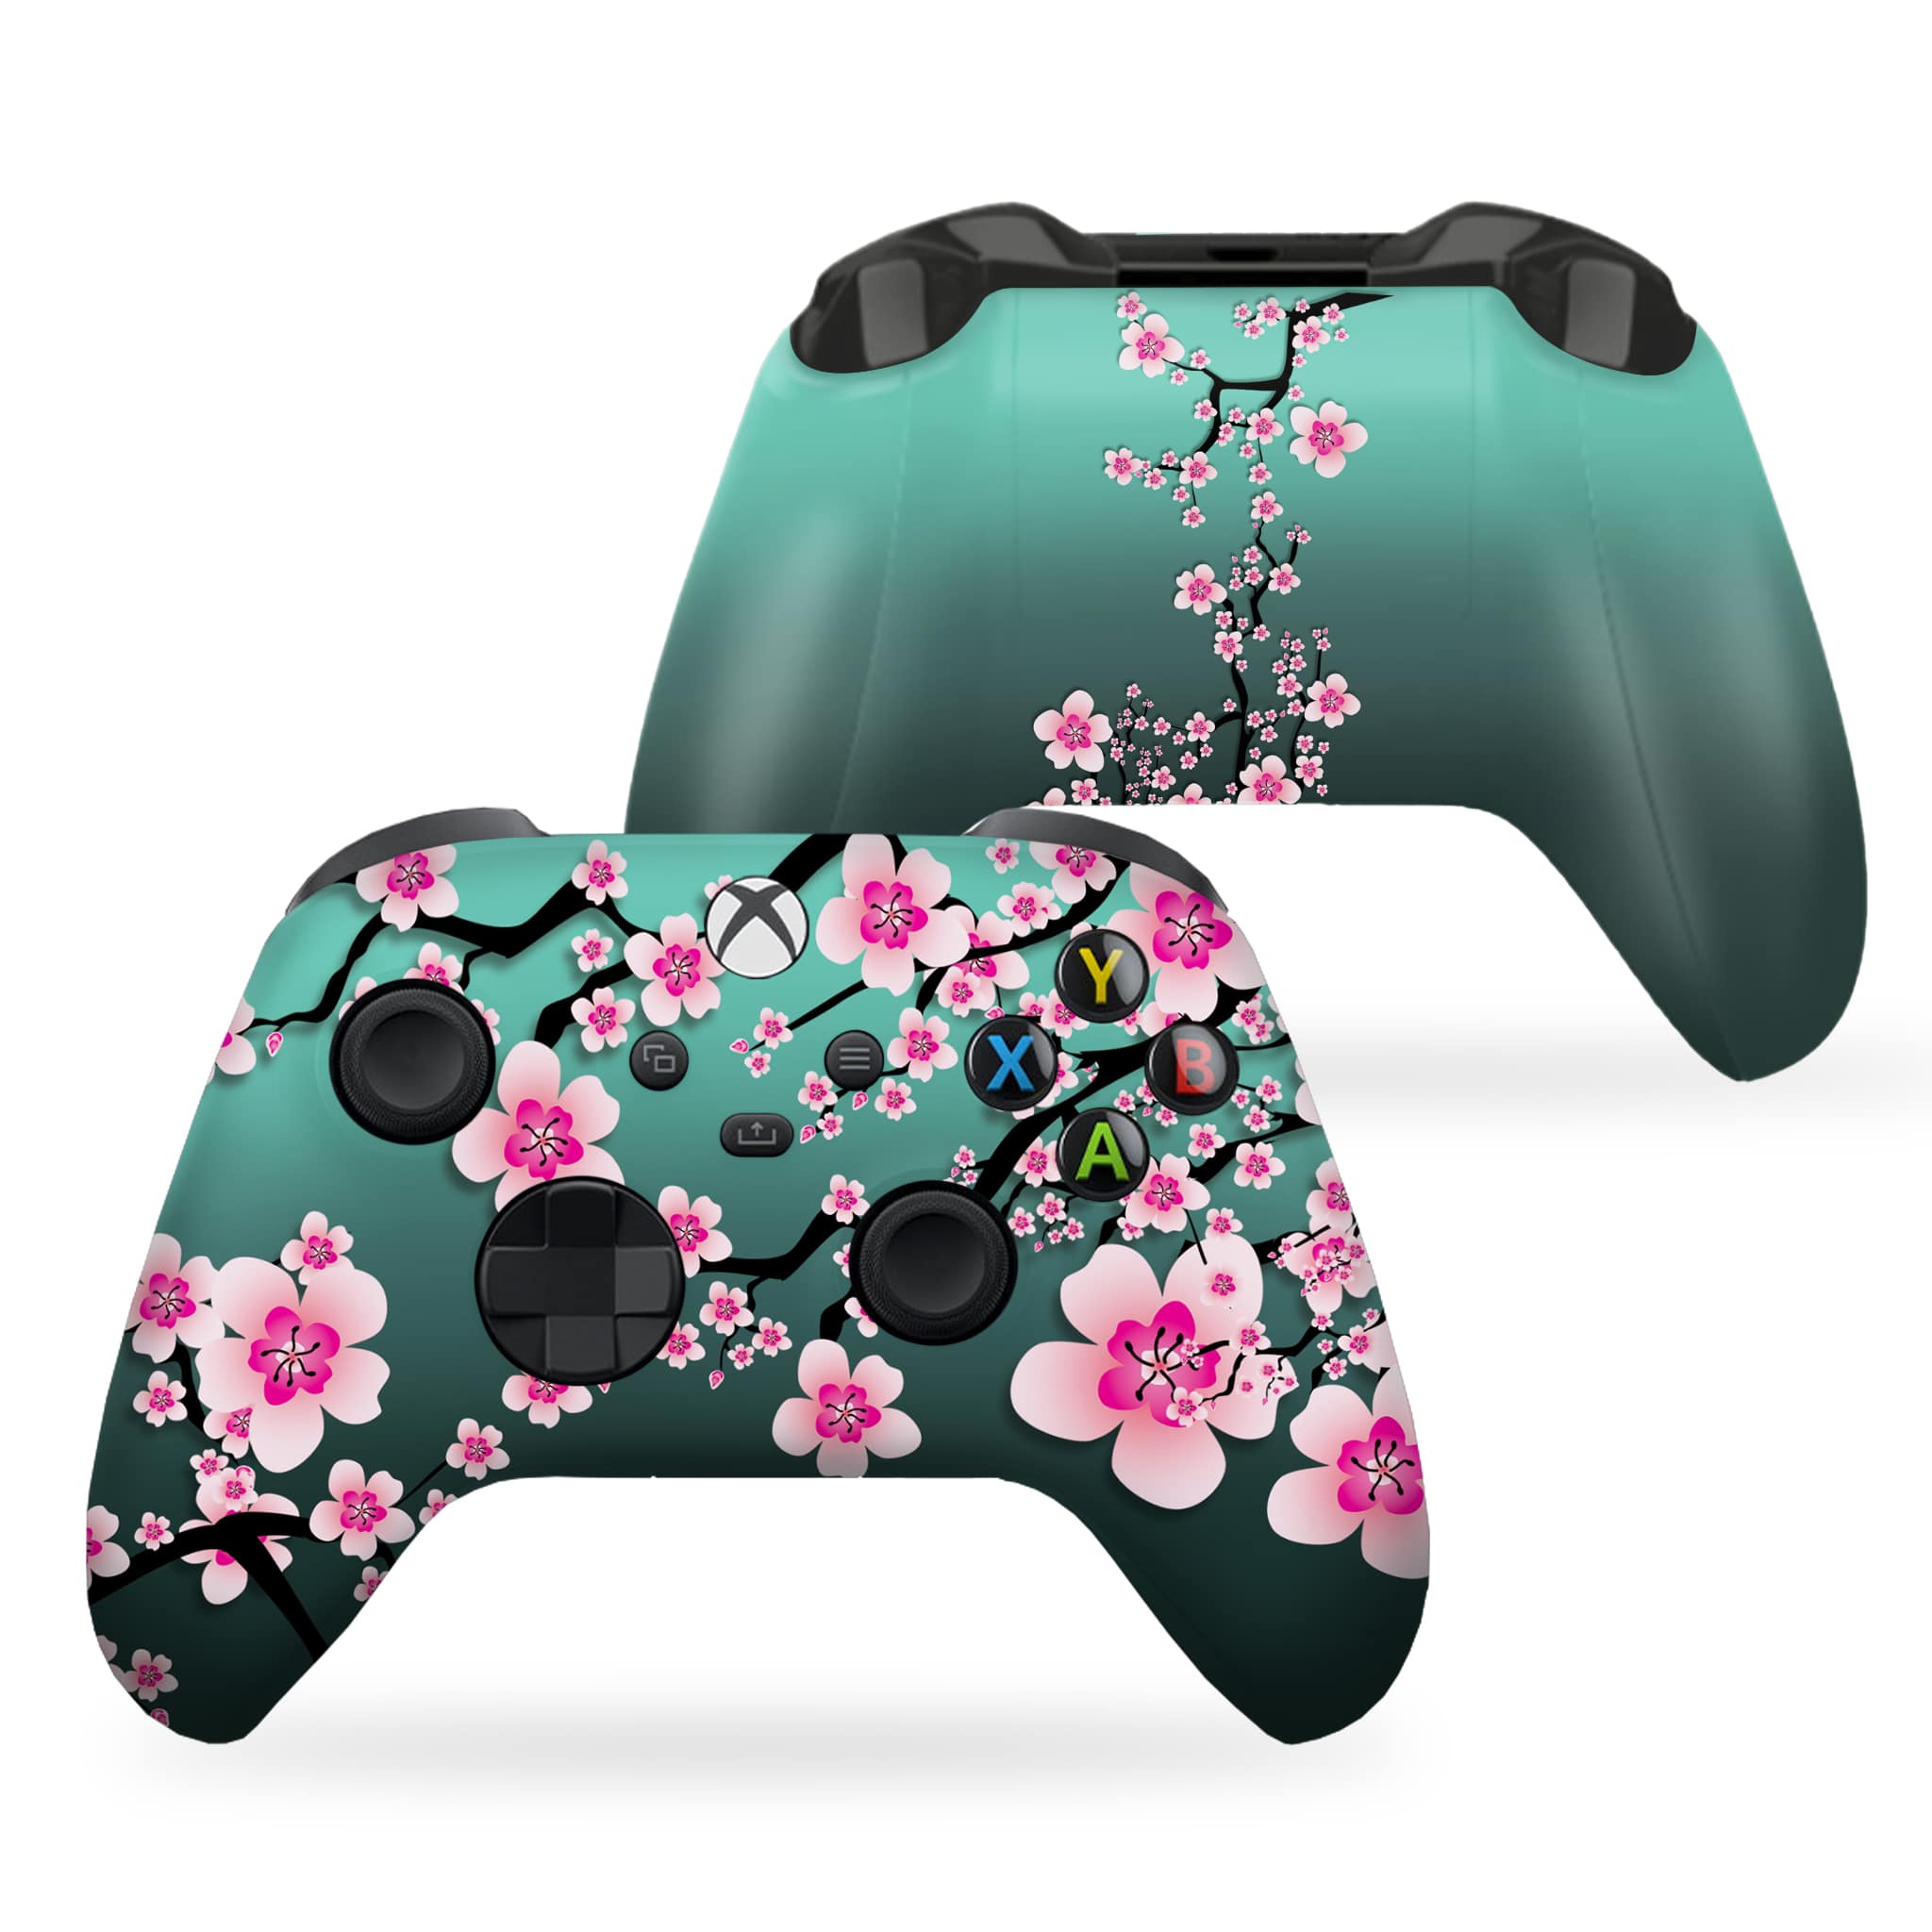 Cherry Blossom Xbox Series X Controller | Xbox Series X Controller PC - Dream Controller